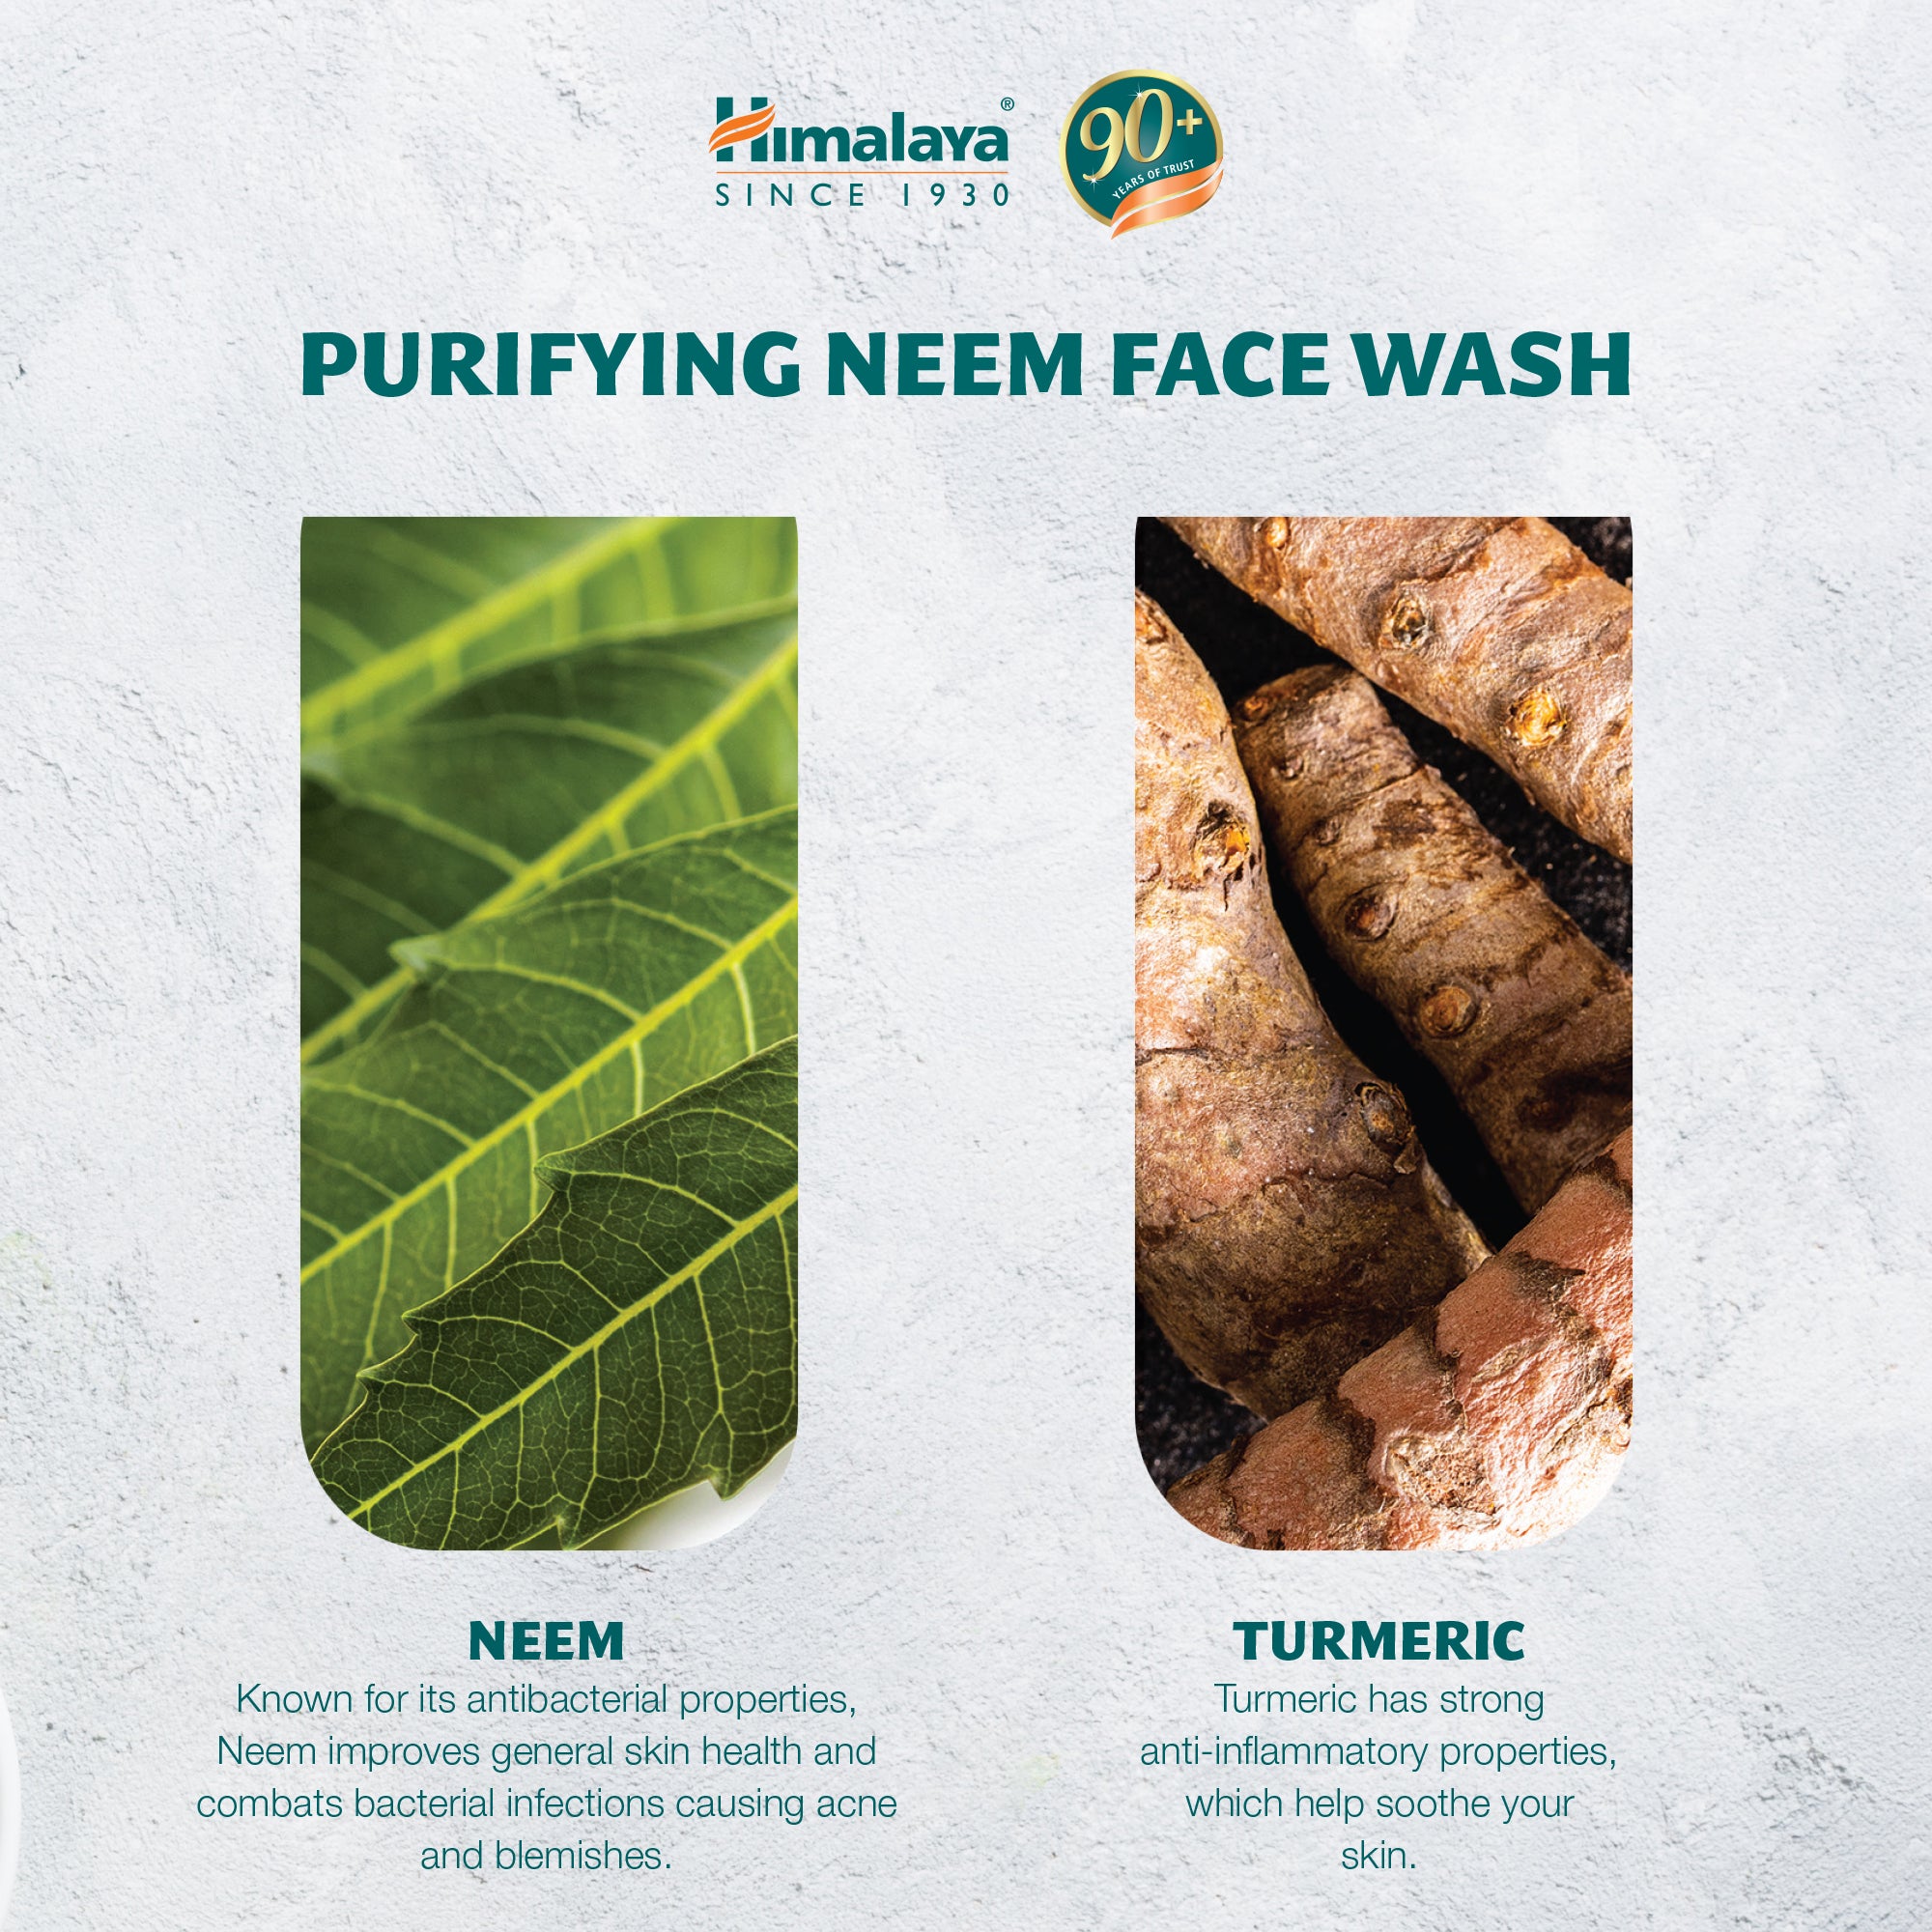 Himalaya Purifying Neem Face Wash - 150ml